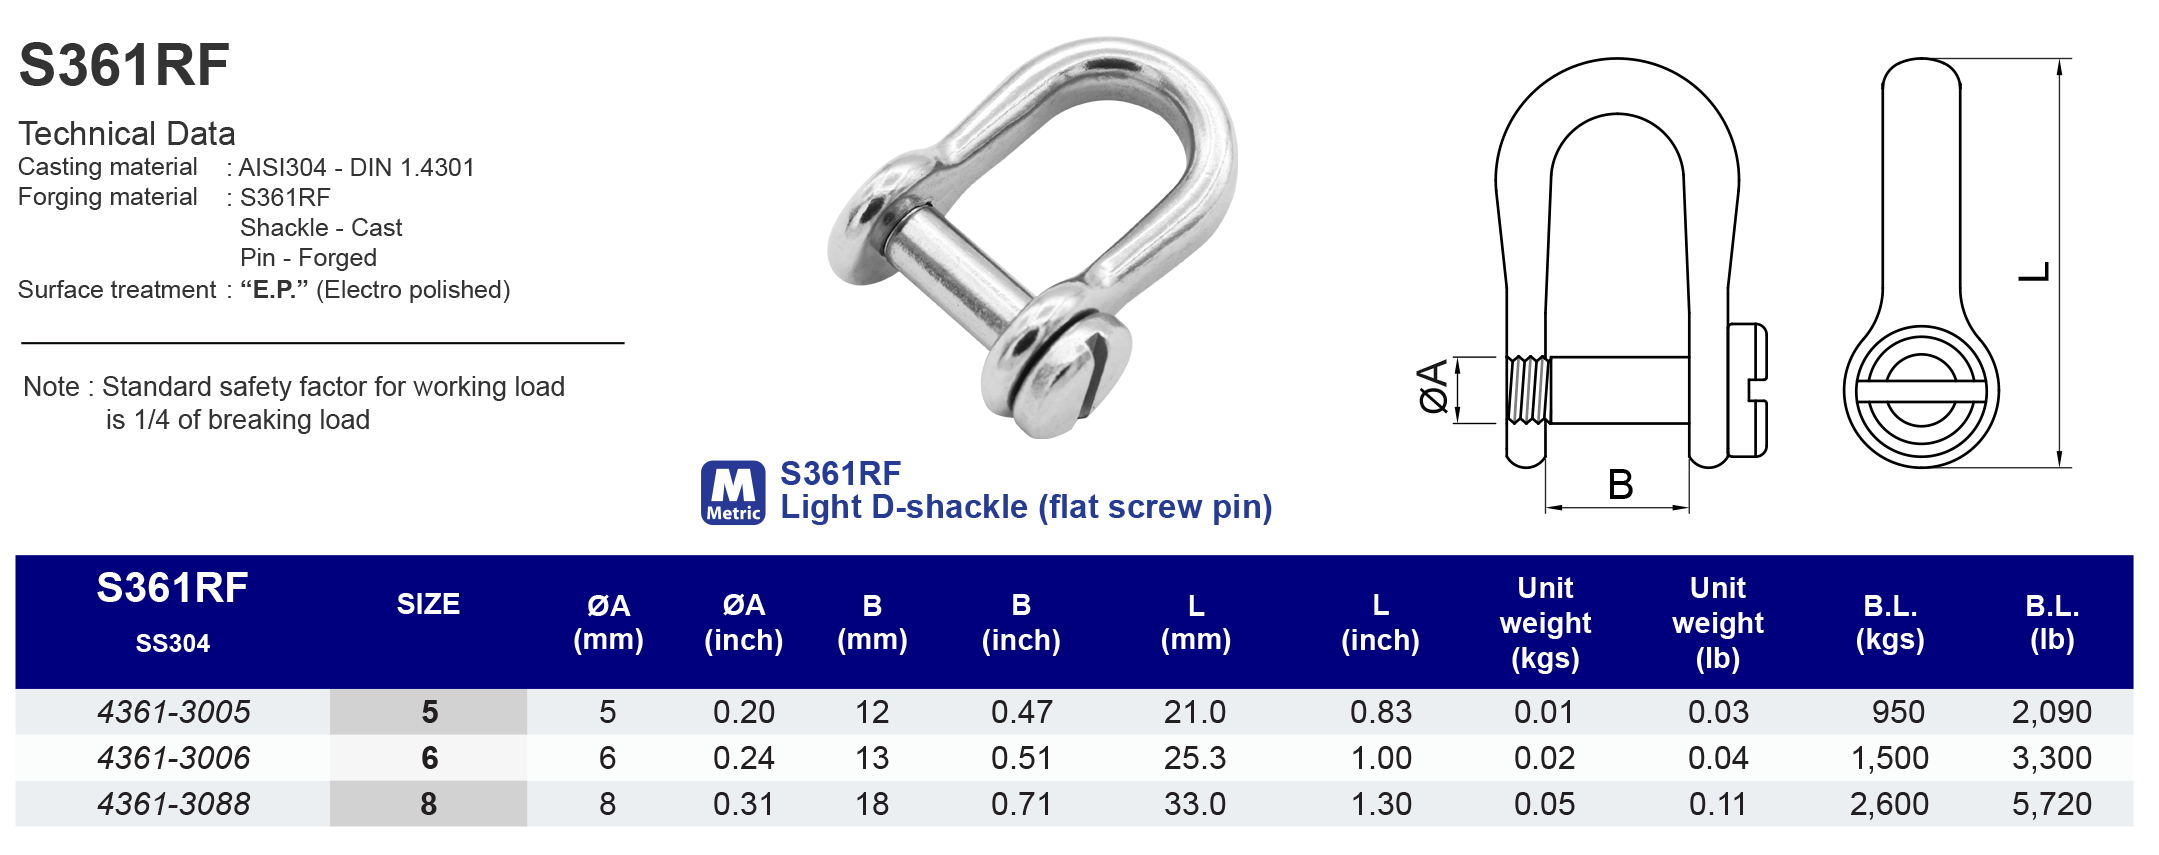 S361RF Light D-shackle (flat screw pin) - 304